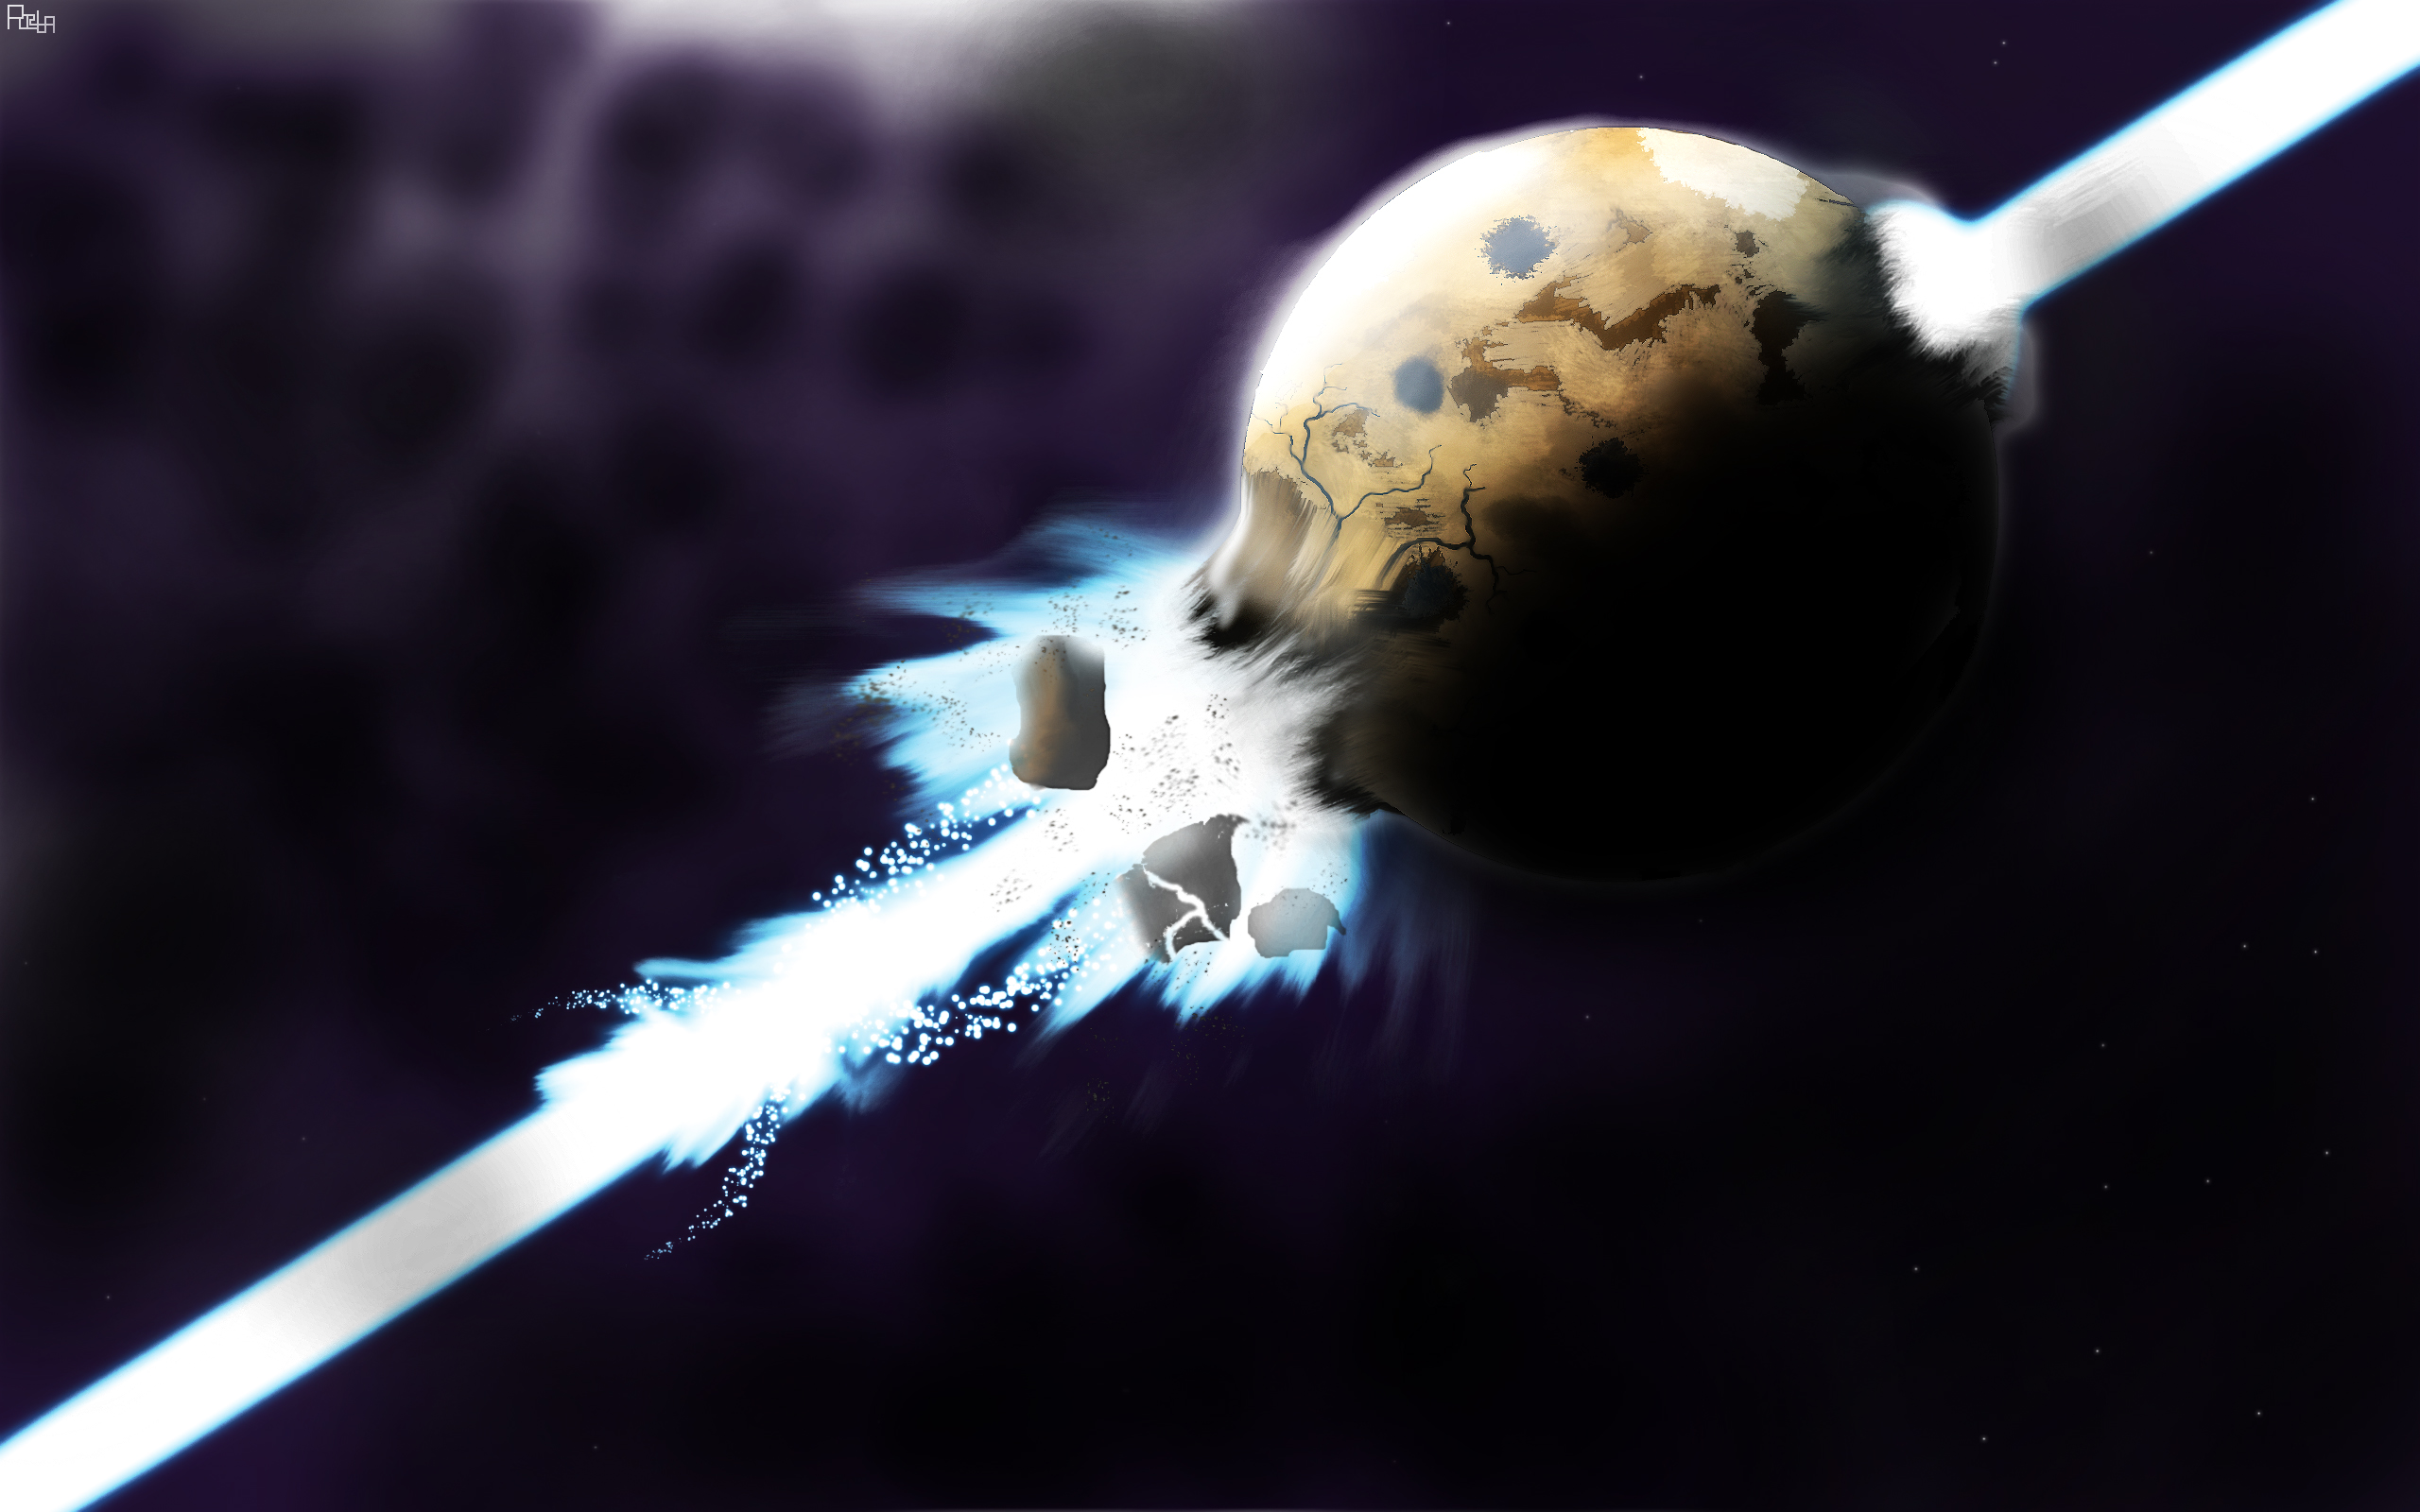 Sci-Fi desktop wallpaper with explosive scene titled Just Passin' Through